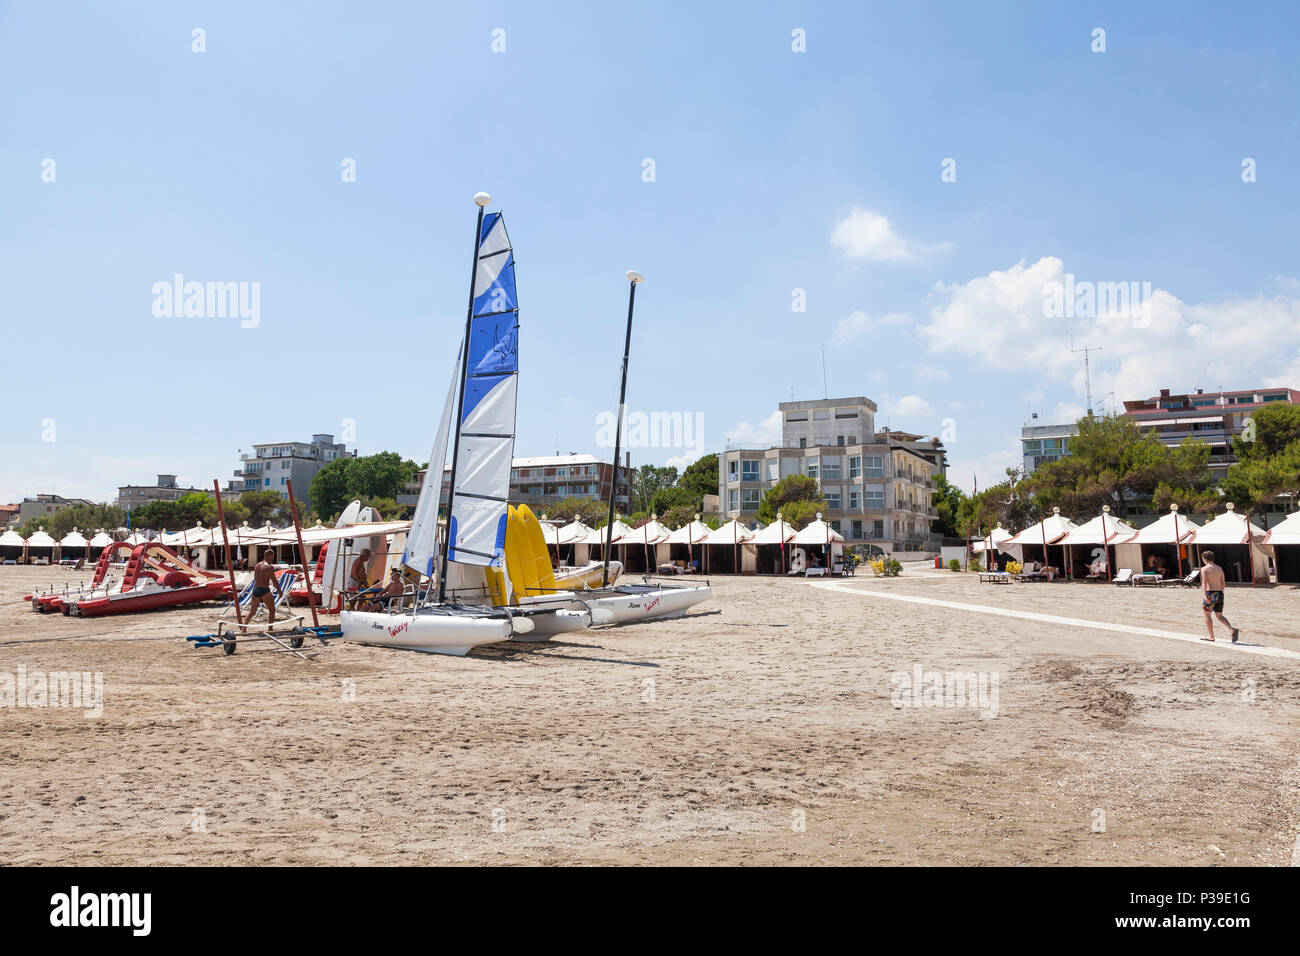 Recreational boats and surf boards for hire on a sandy beach, Lido di Venezia, Venice, Veneto,  Italy Stock Photo